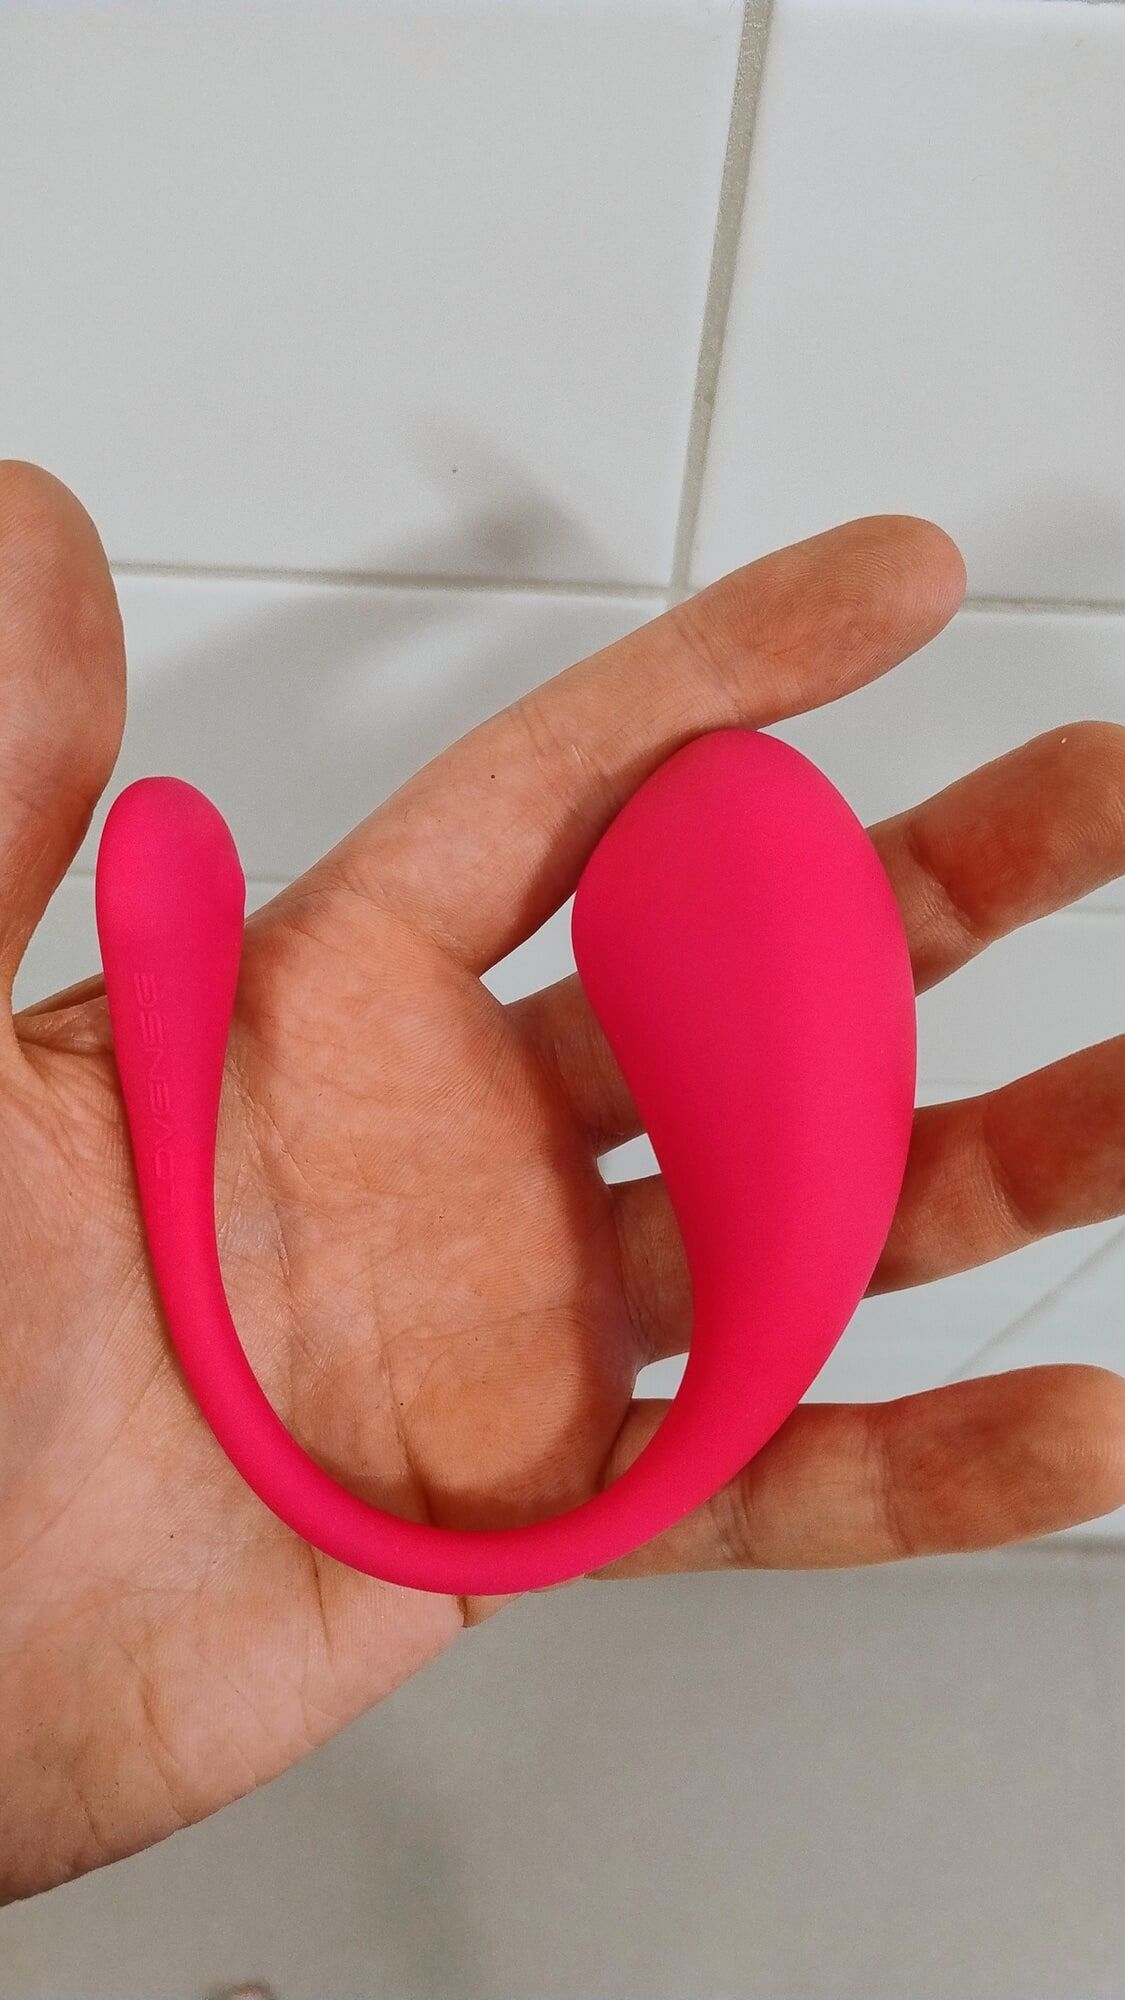 Lush 3 my new sex toy #Lush3 #lovense